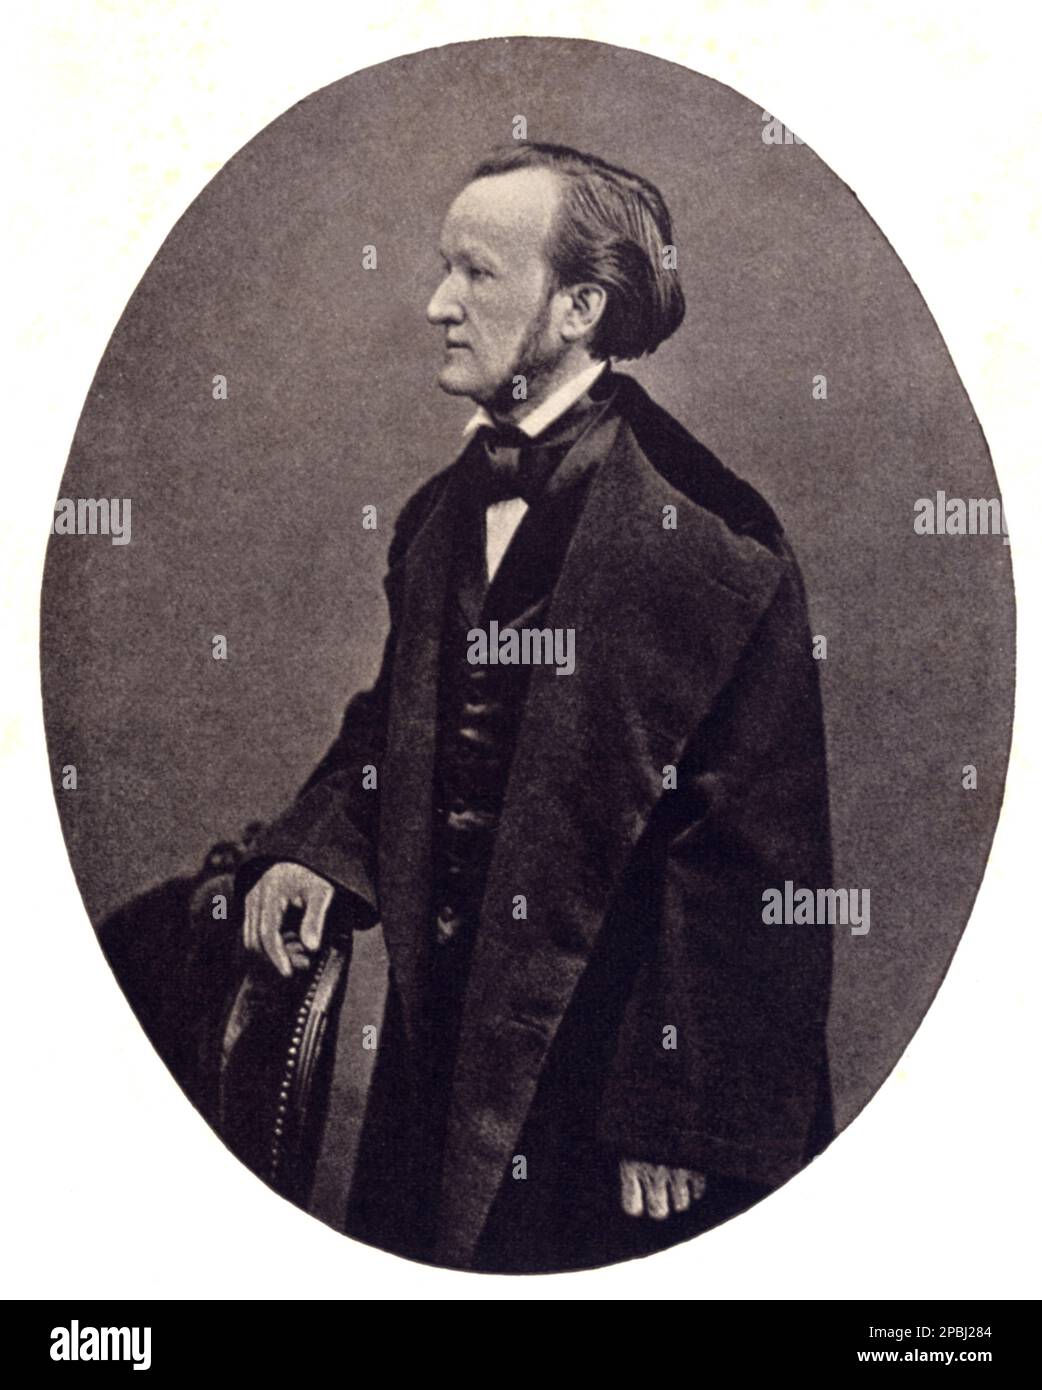 1860 , Brüssel , Belgien : der deutsche Komponist RICHARD WAGNER ( 1813 - 1883 ) - MUSIK - KLASSIK - MUSICA CLASSICA - LIRICA - OPER - profilo Profil - Compositore - Musicista - Portrait - ritratto - COMPOSITORE - OPERA LIRICA - MUSICISTA - Kragen - colletto - CRAVATTA - KRAWATTE - - - ---- ARCHIVIO GBB Stockfoto